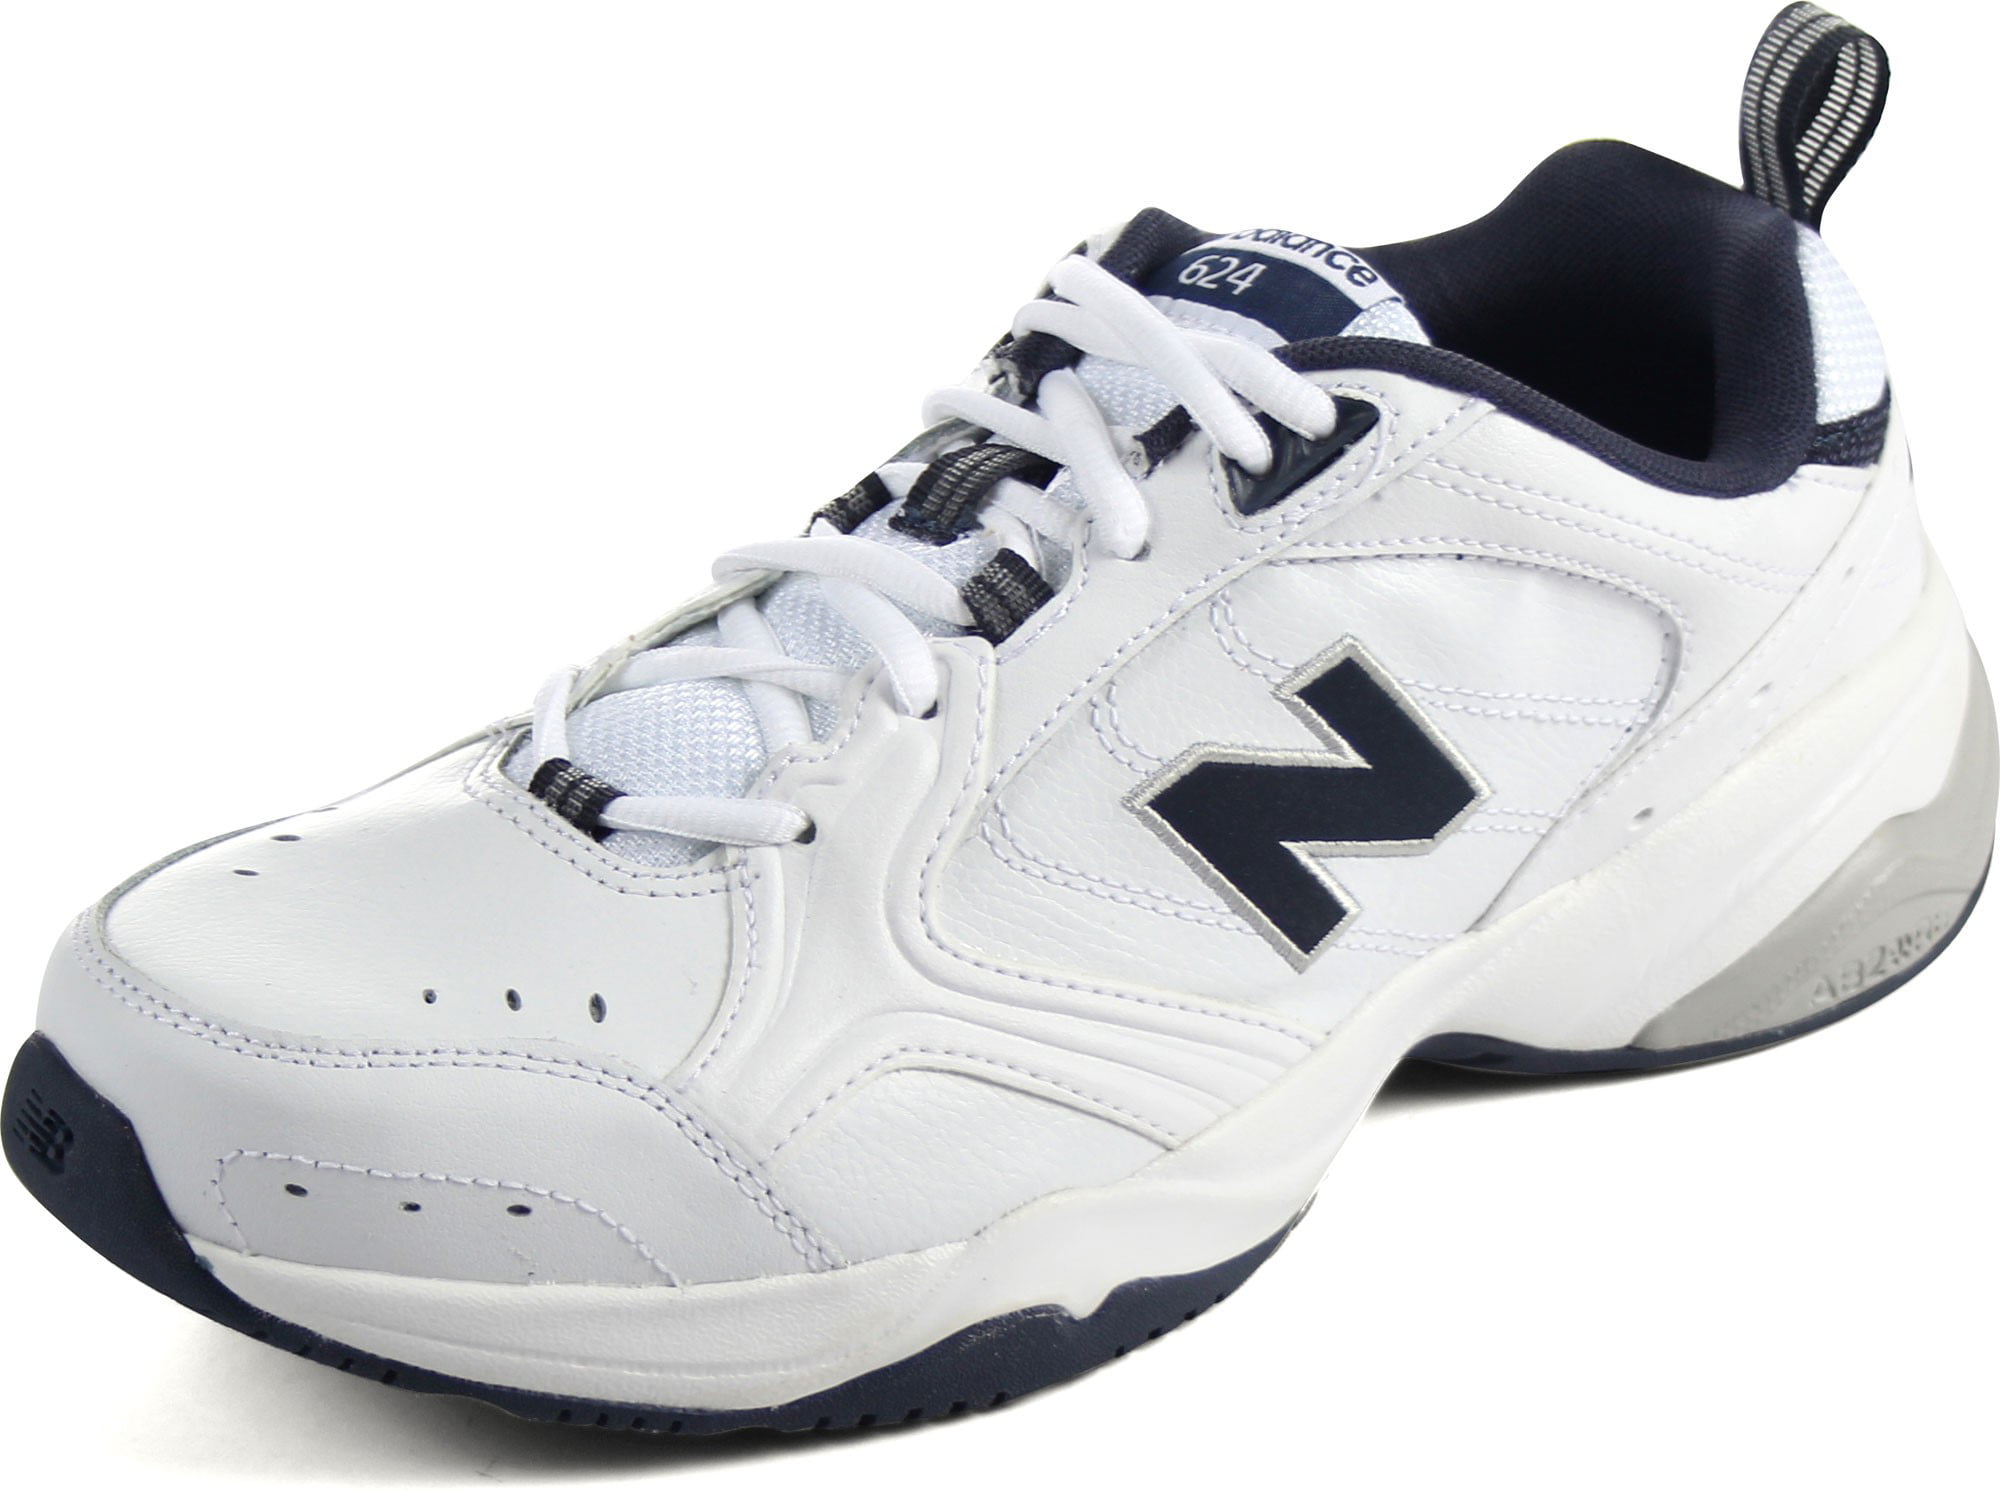 New Balance - New Balance Men's MX624v2 Casual Comfort Training Shoe